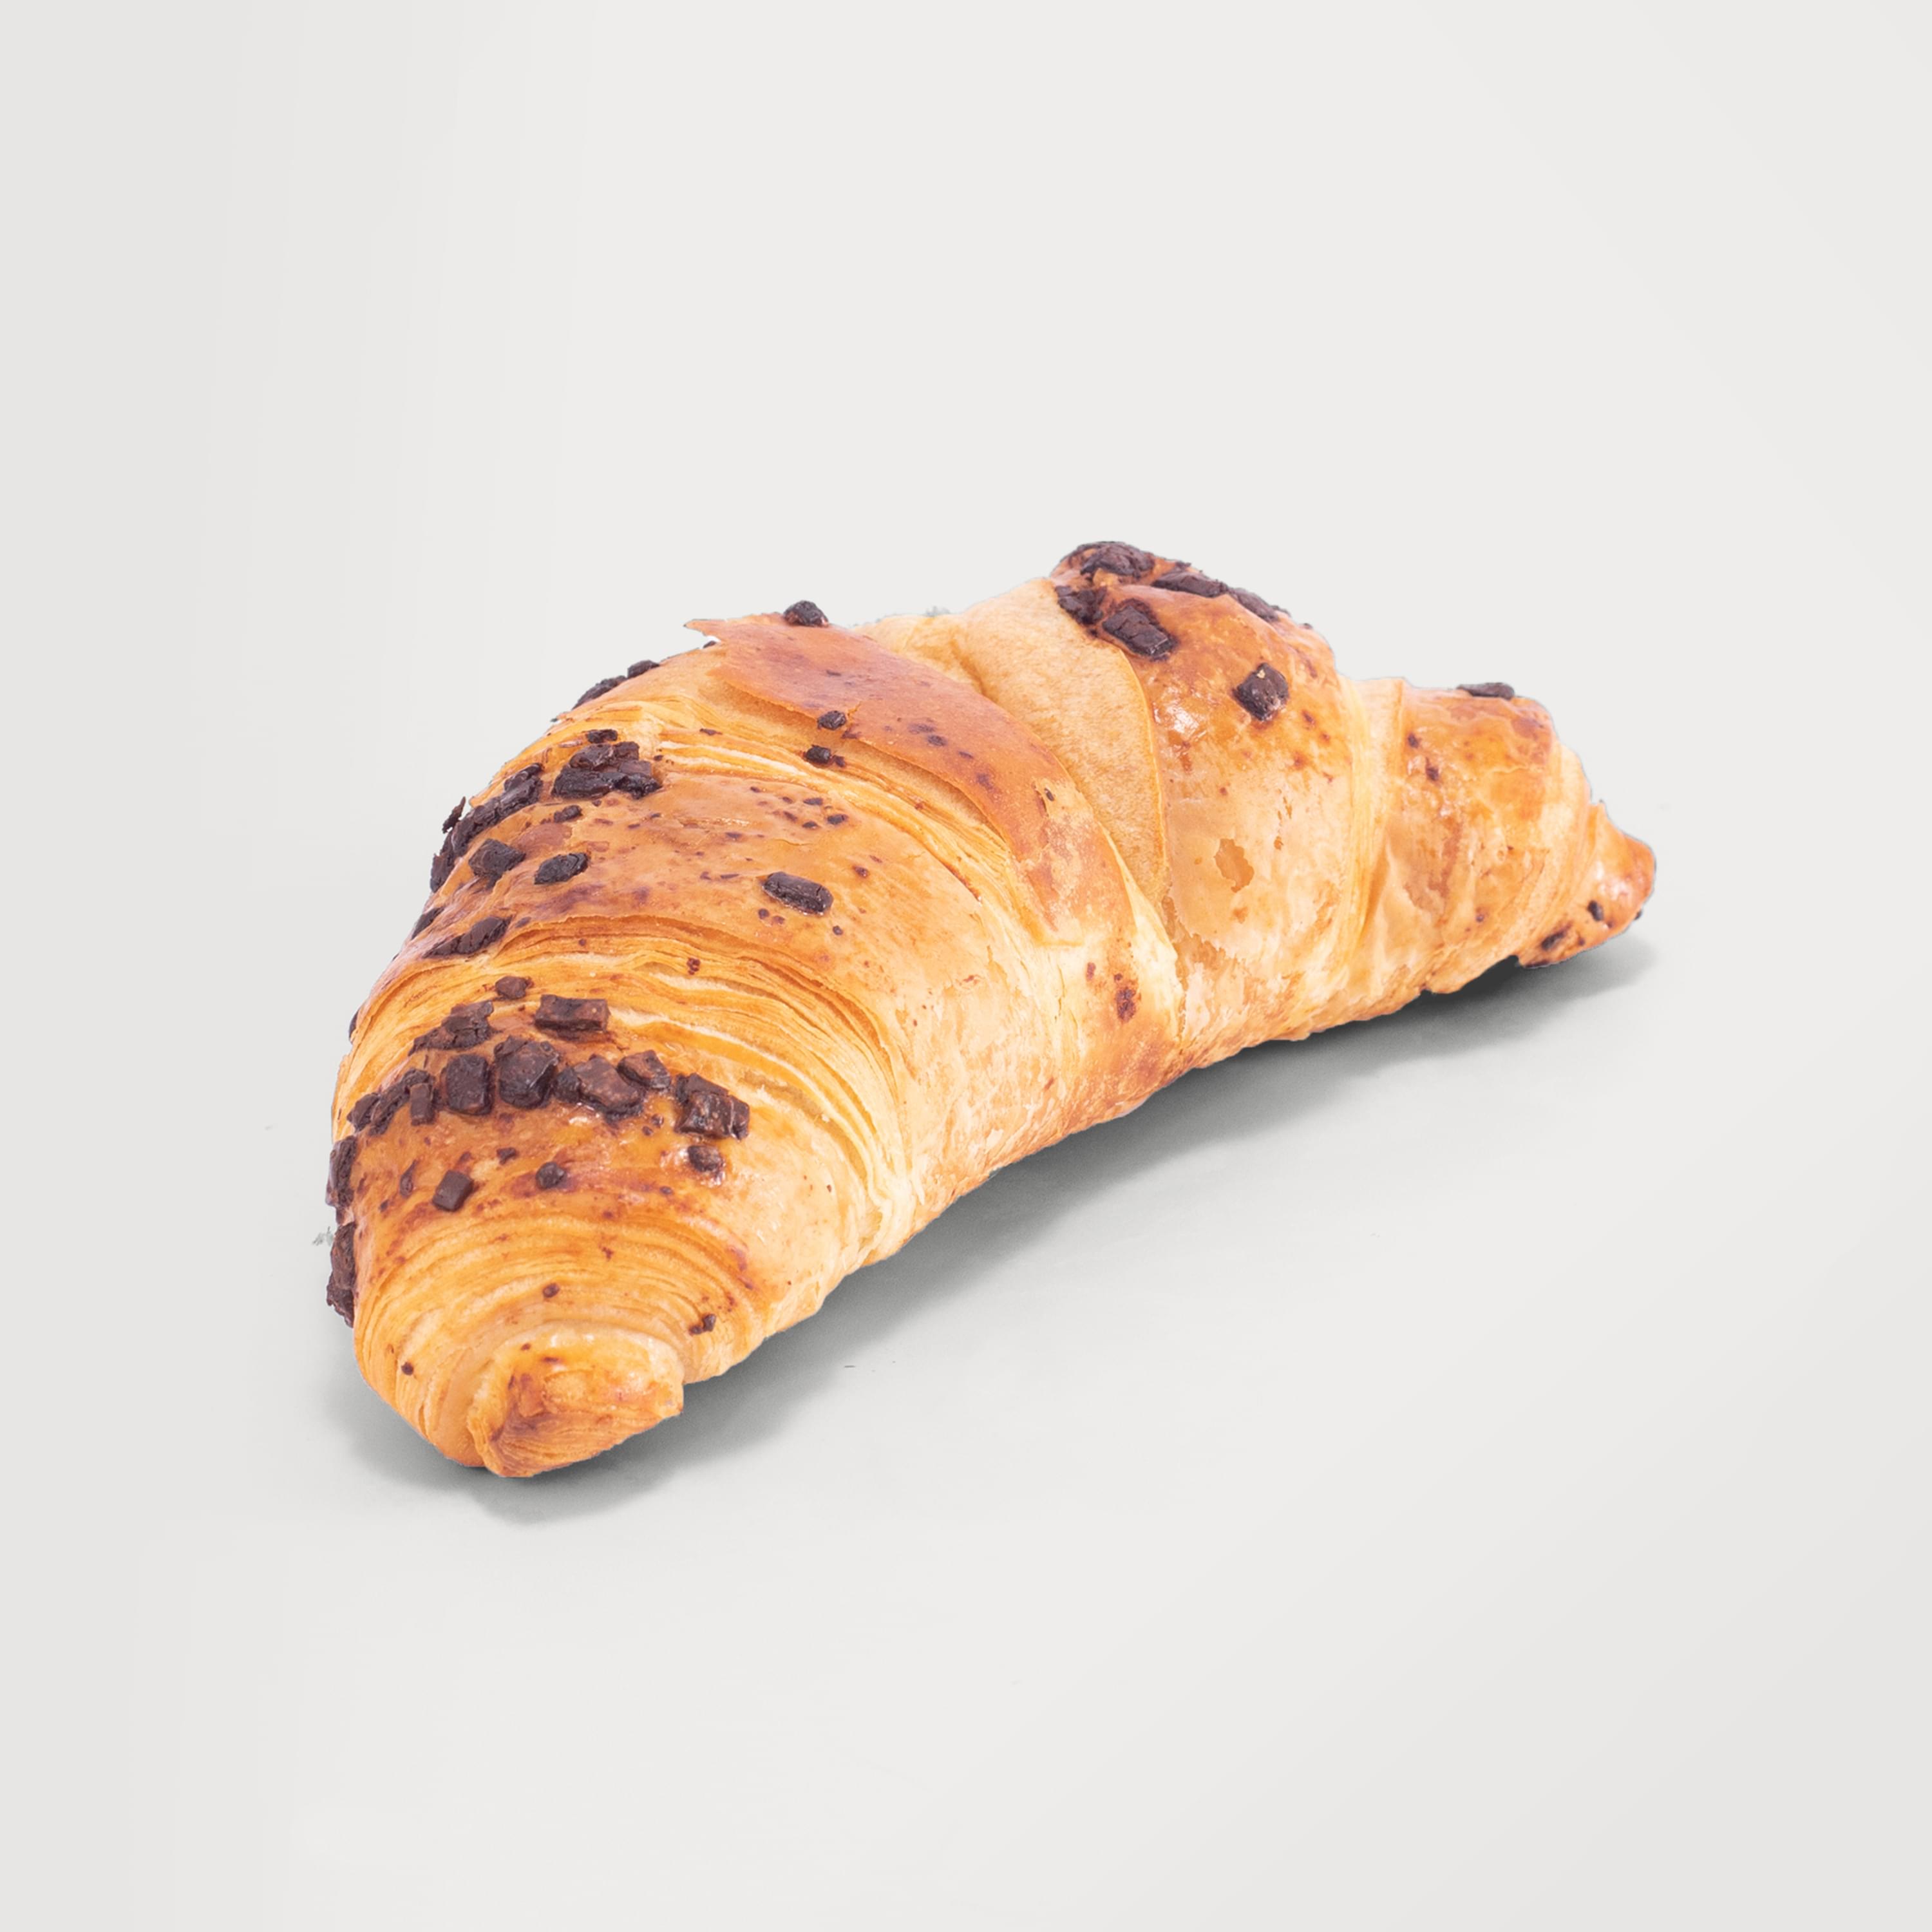 Pastry croissant choc hazelnut thumb